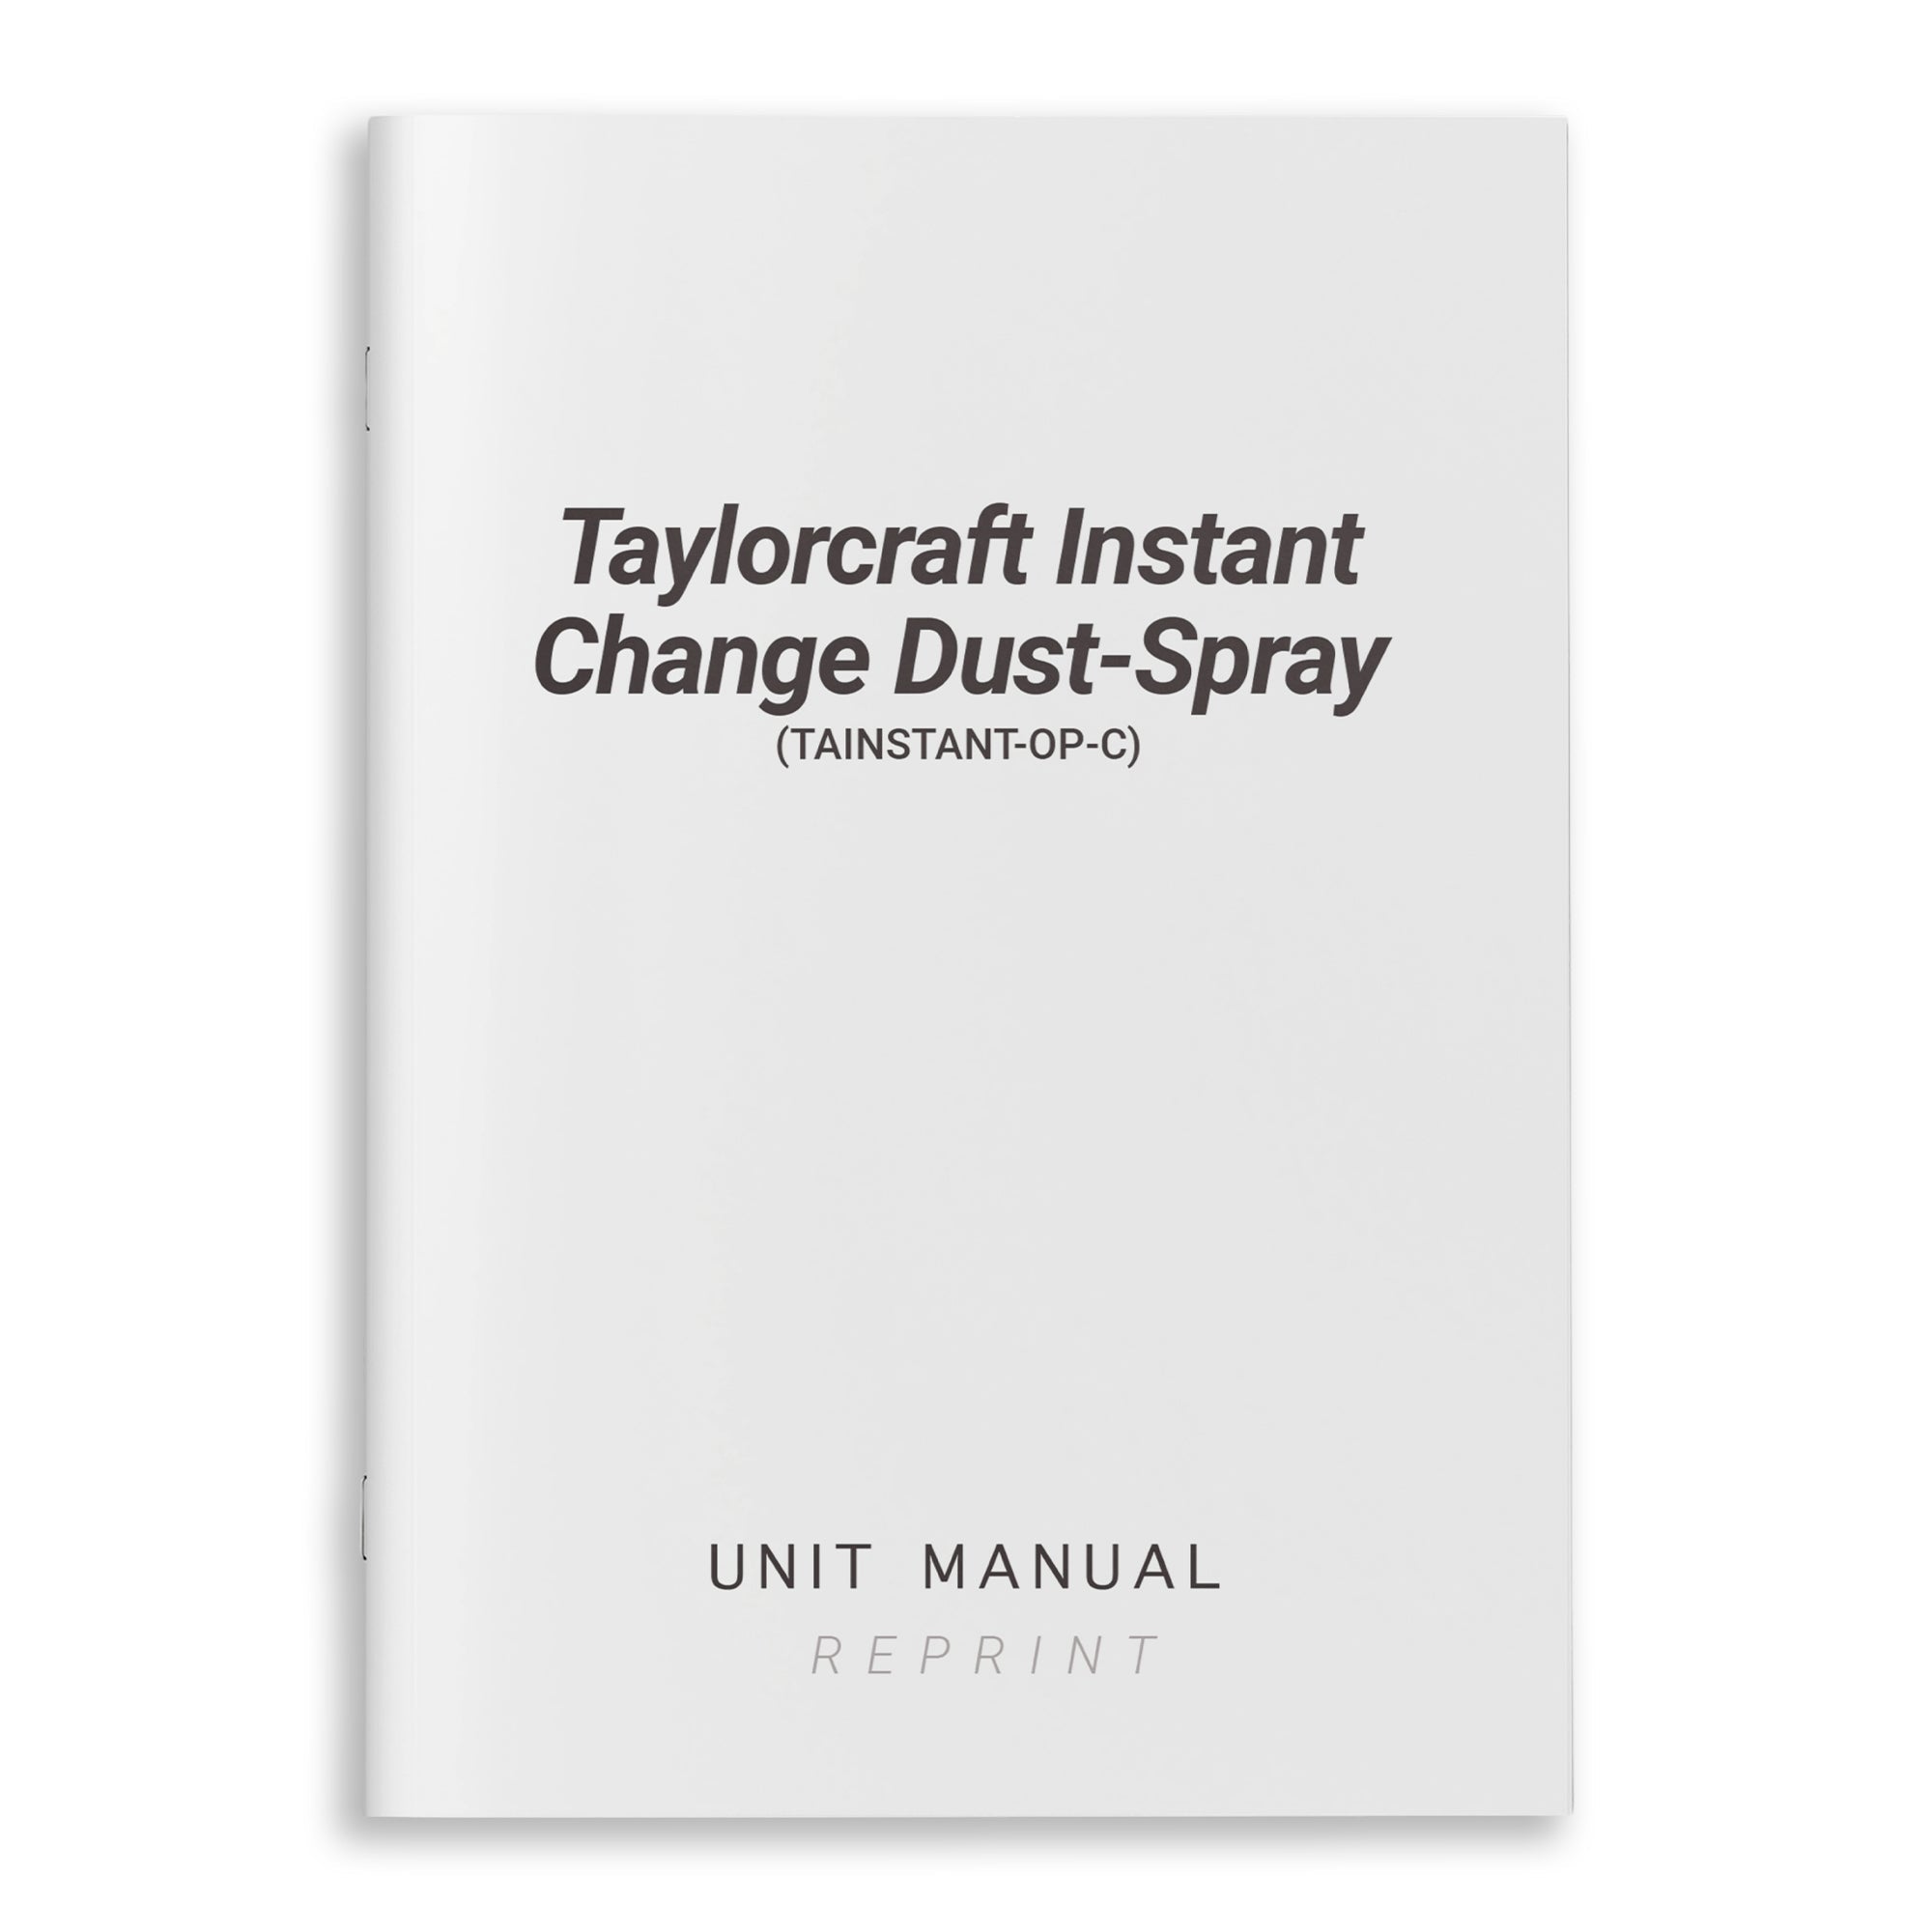 Taylorcraft Instant Change Dust-Spray Unit Manual (TAINSTANT-OP-C) - PilotMall.com